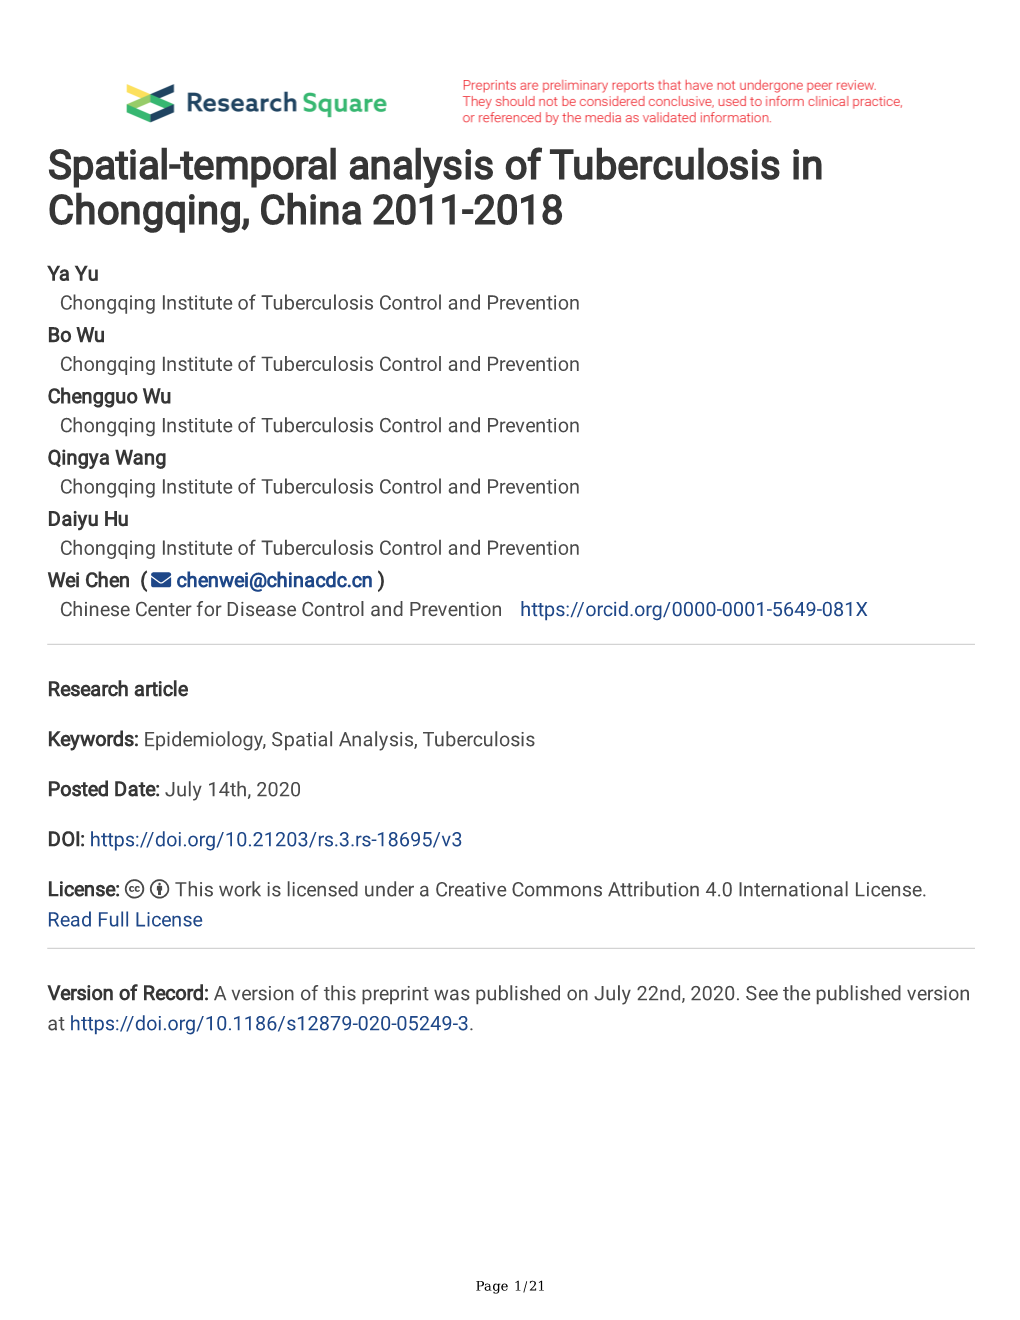 Spatial-Temporal Analysis of Tuberculosis in Chongqing, China 2011-2018